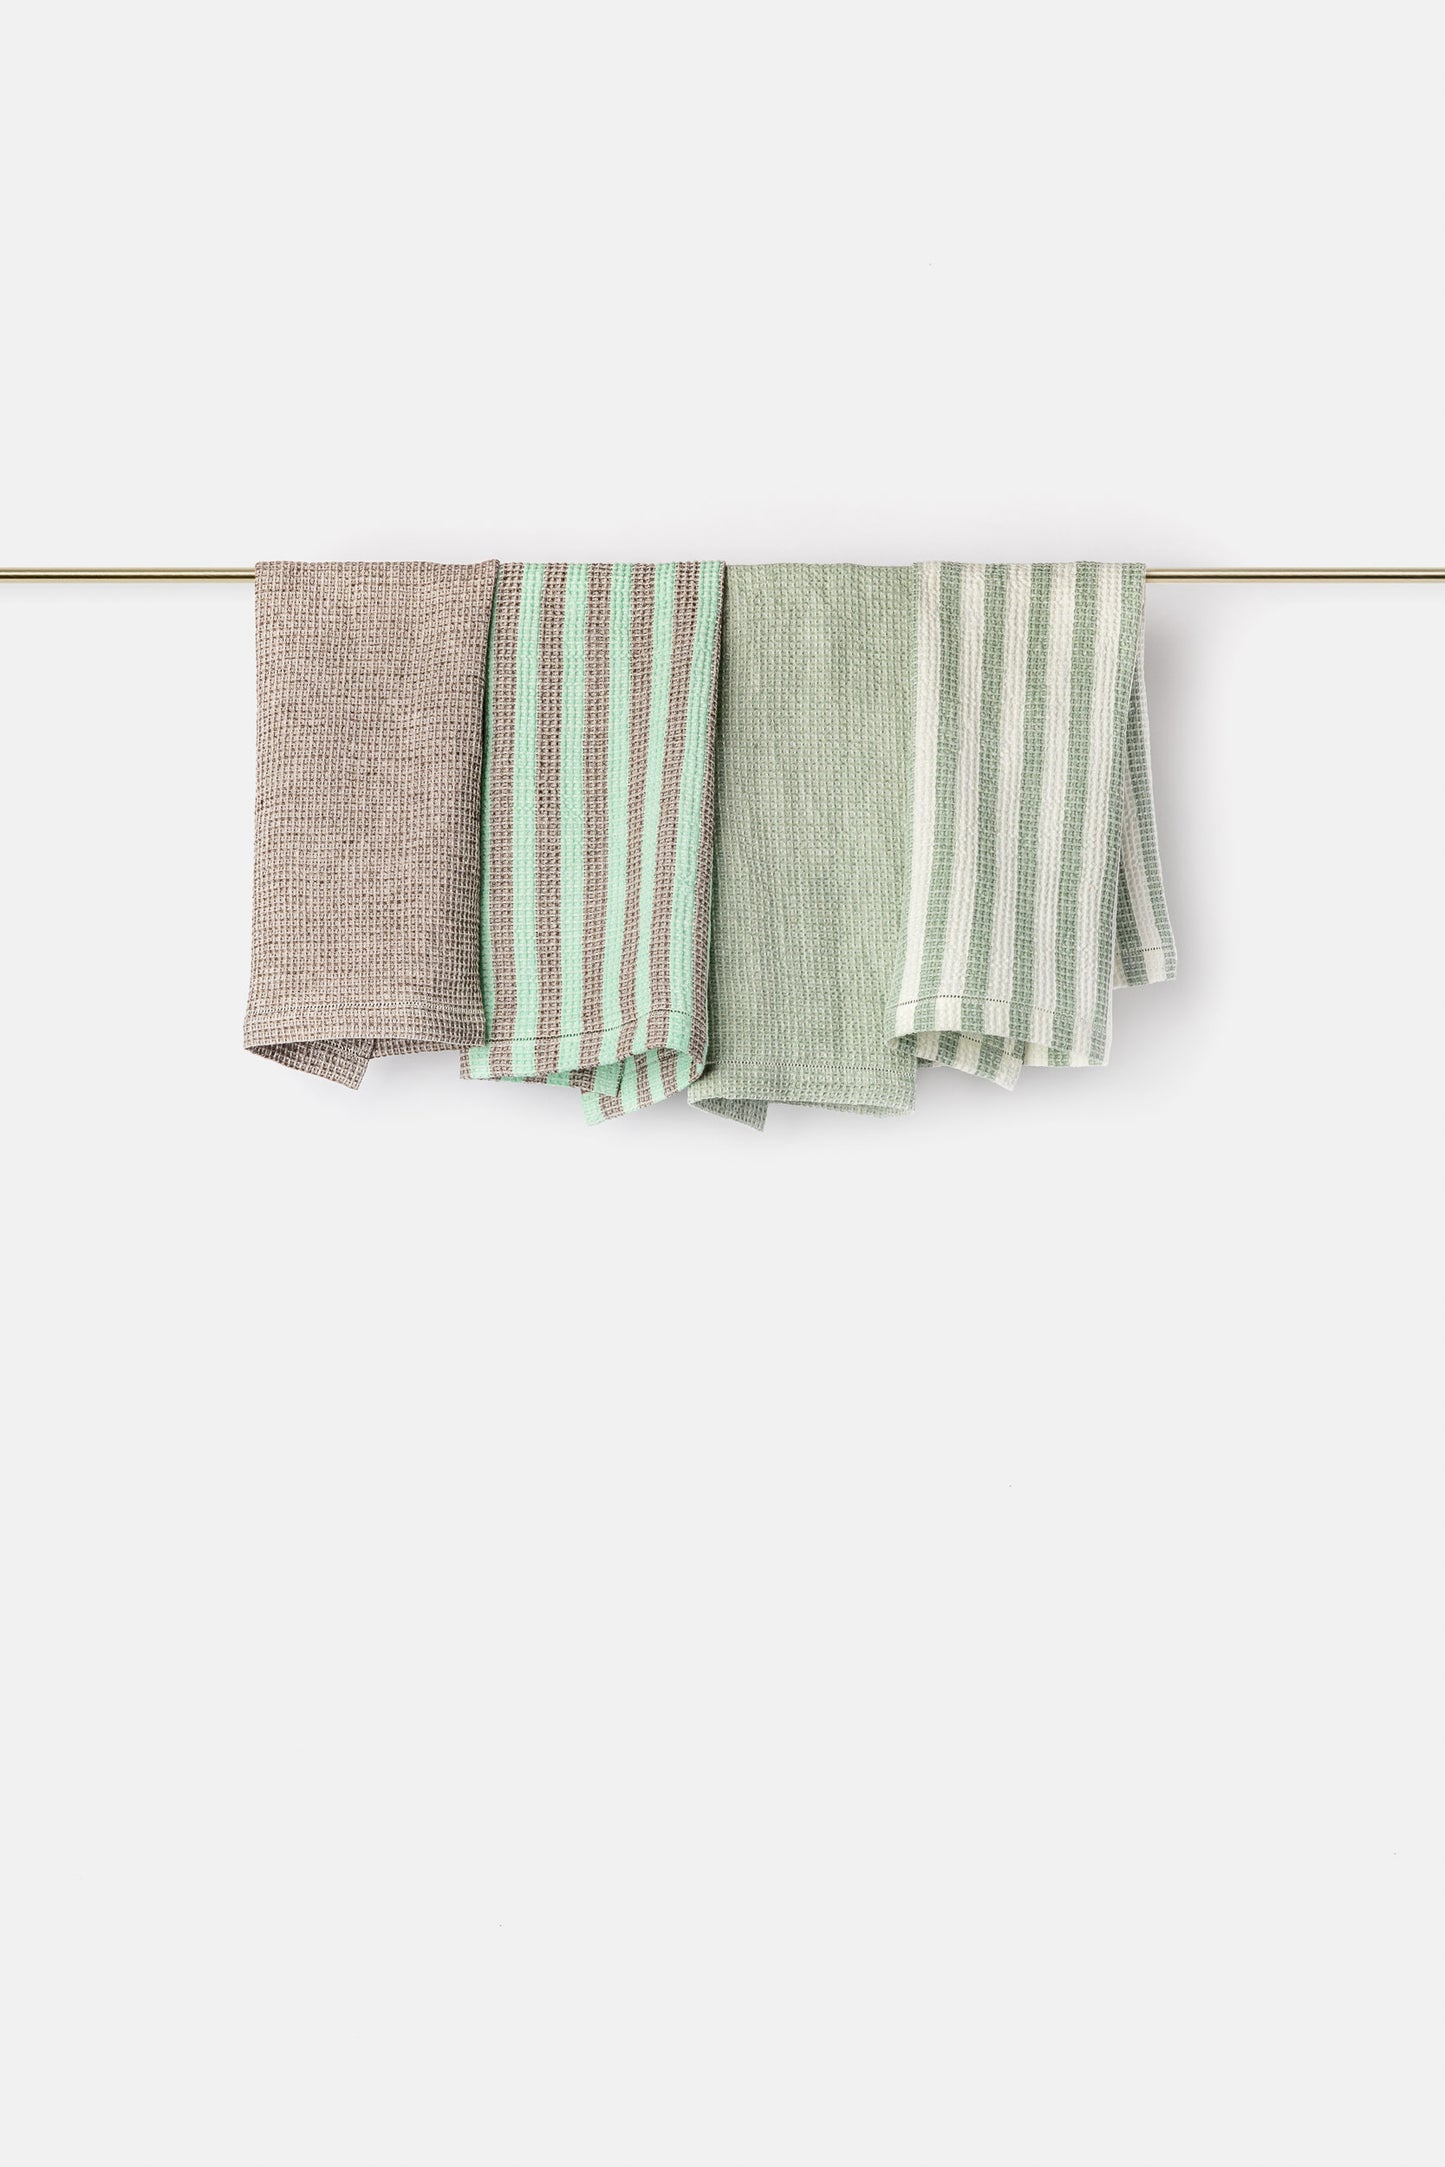 "Montecatini" towels in Parà Green